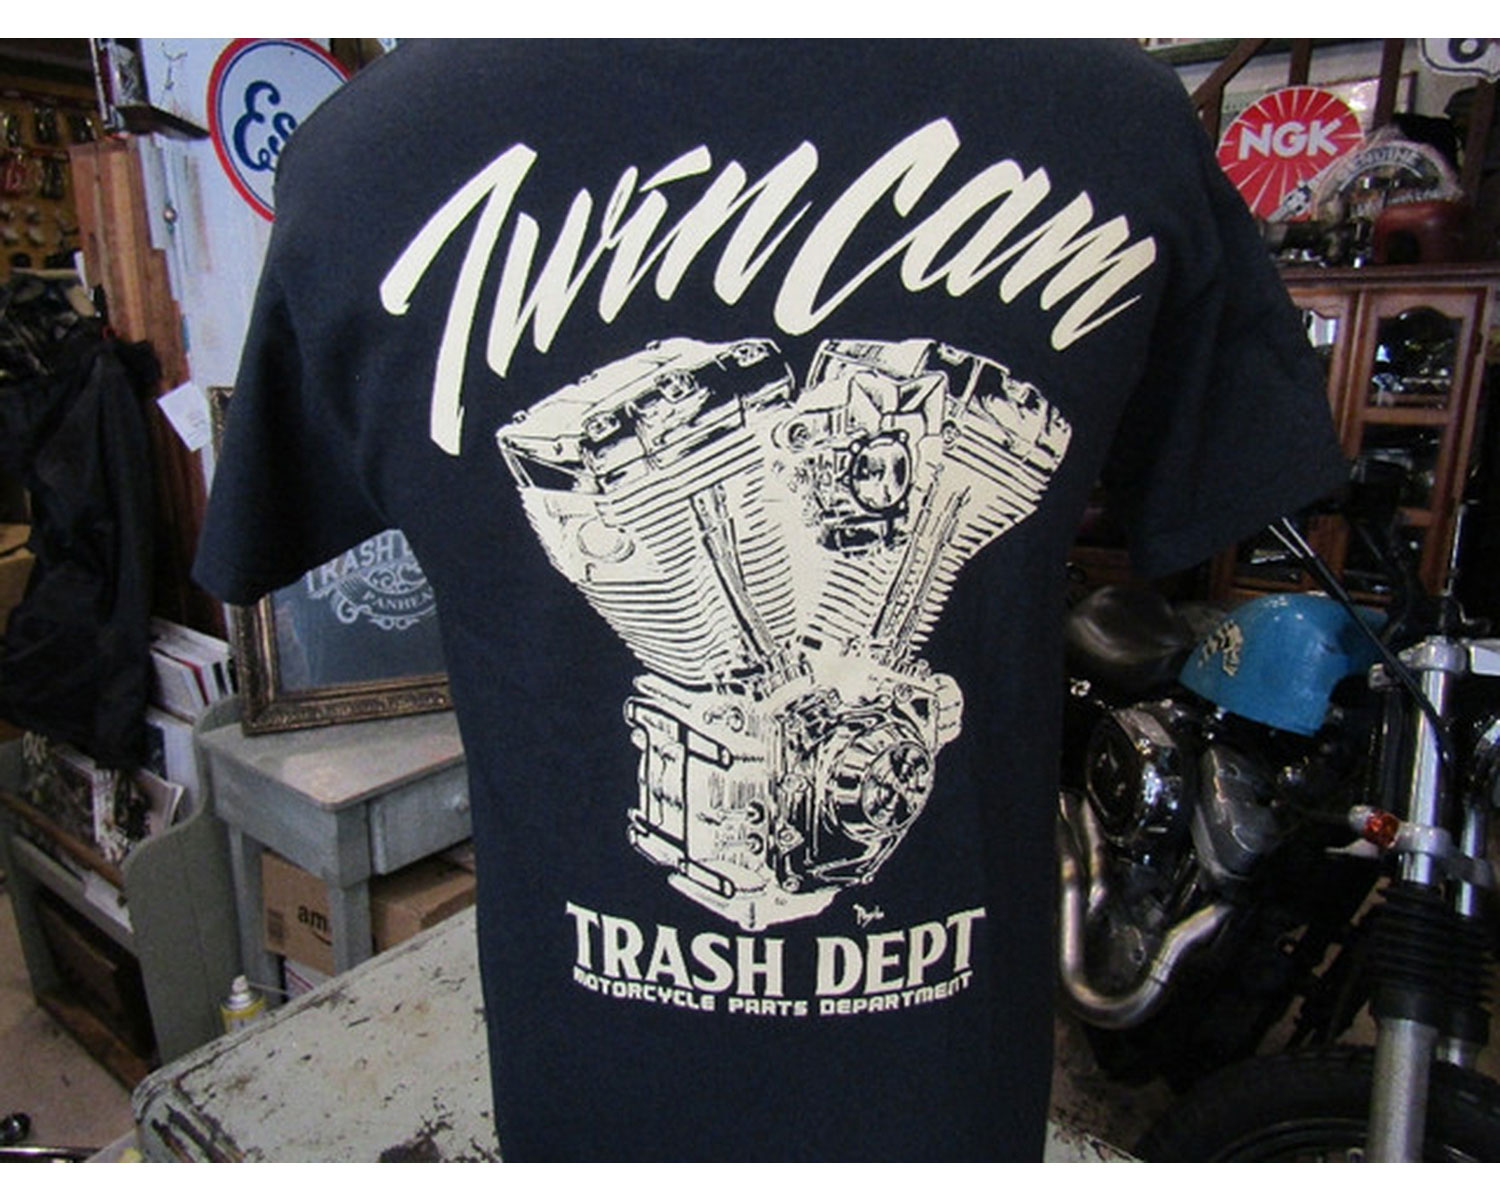 TRASH DEPT オリジナルTシャツ ツインカム M - ハーレー用パーツ カスタムパーツの通信販売 ネオファクトリーオンラインショップ